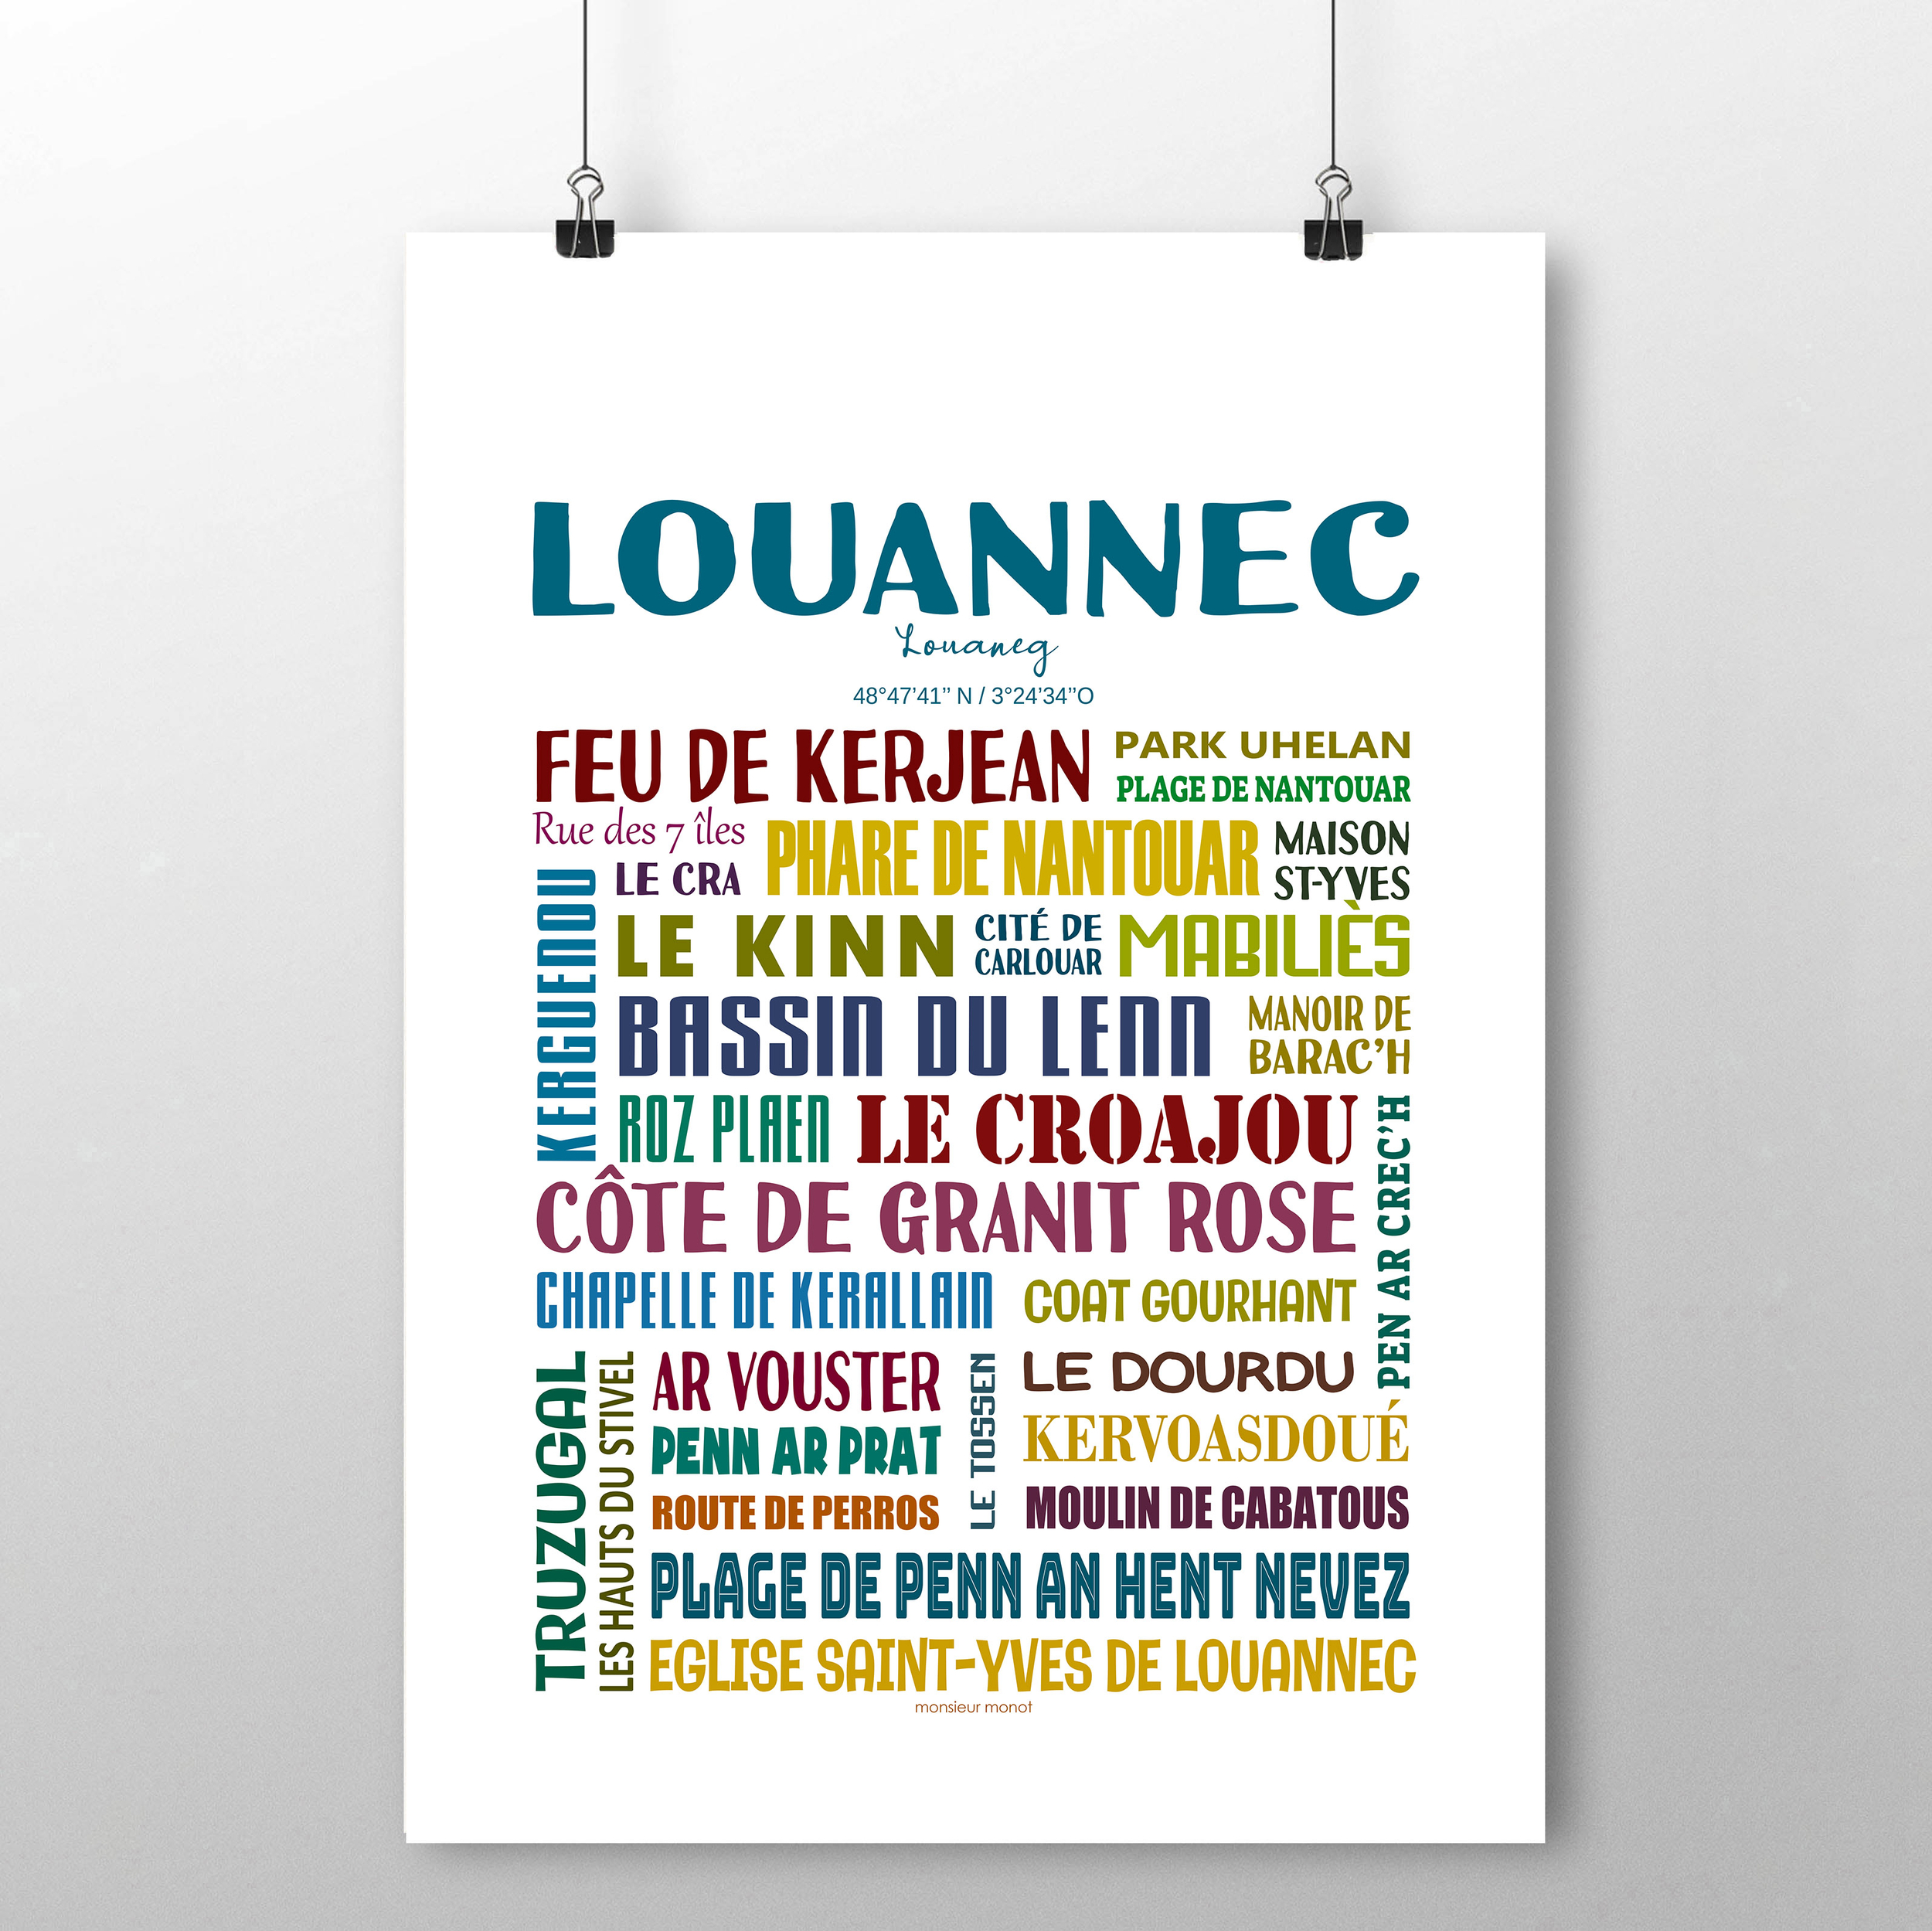 Louannec 1